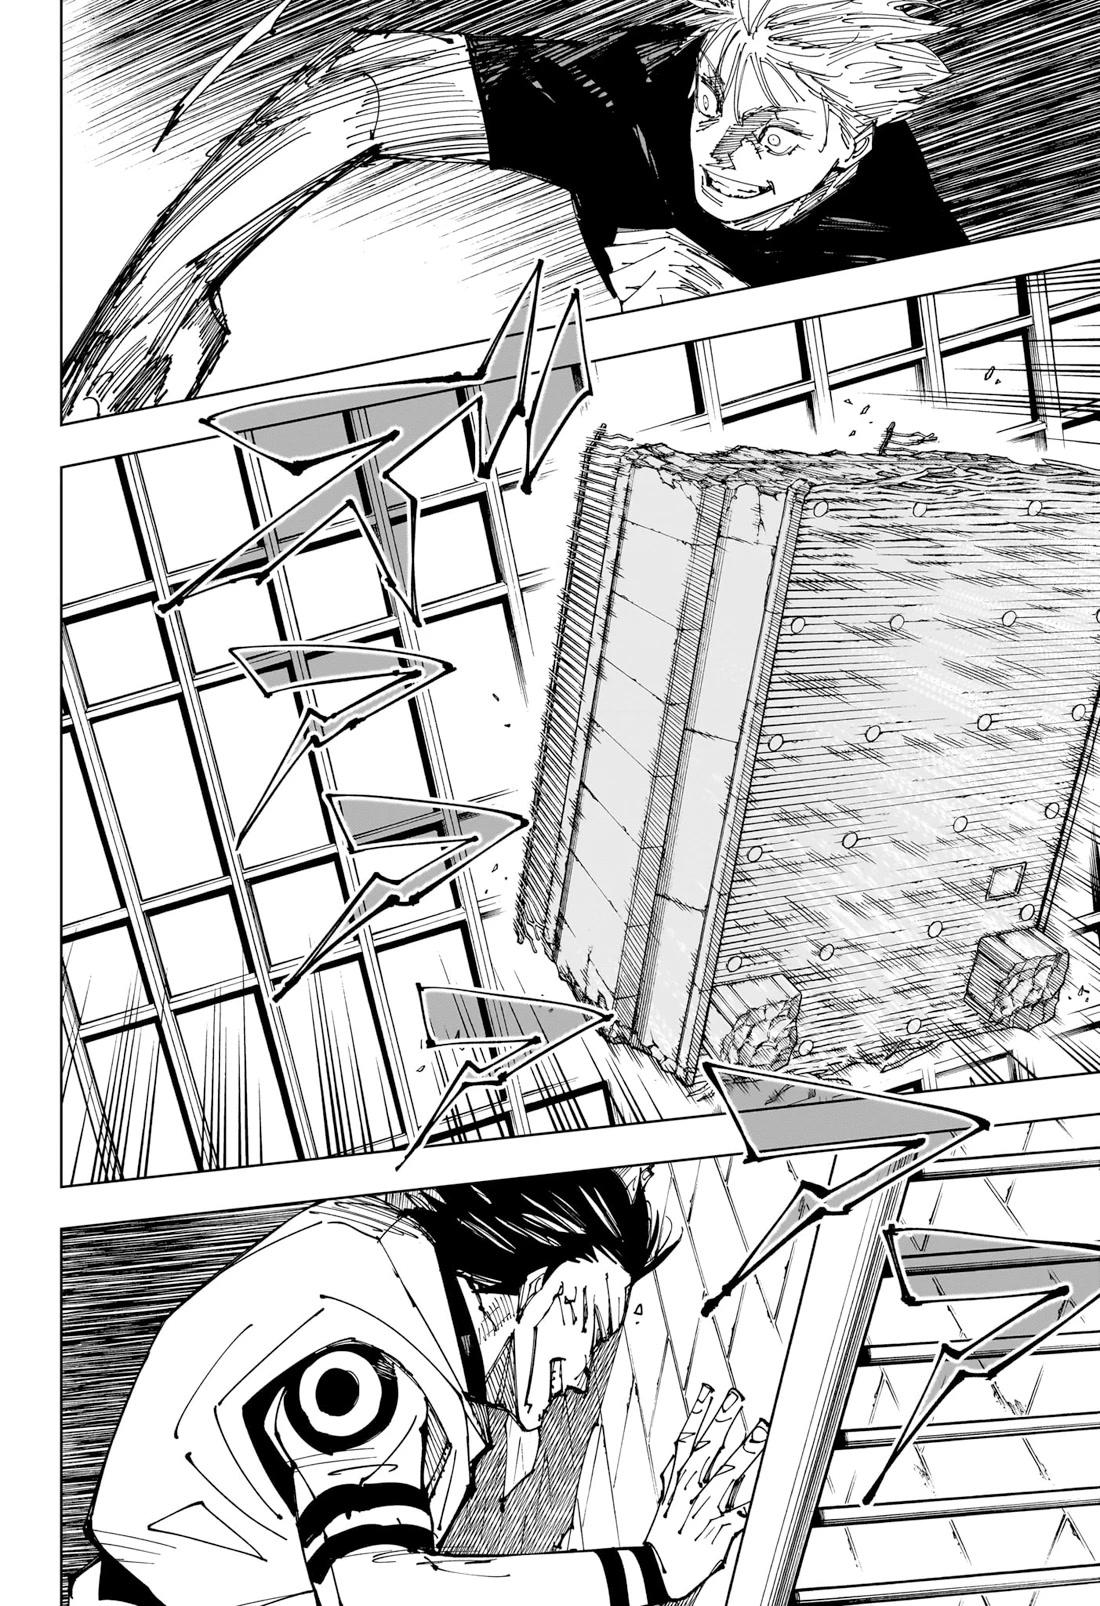 Jujutsu Kaisen Chapter 224: The Decisive Battle In The Uninhabited, Demon-Infested Shinjuku ② page 11 - Mangakakalot